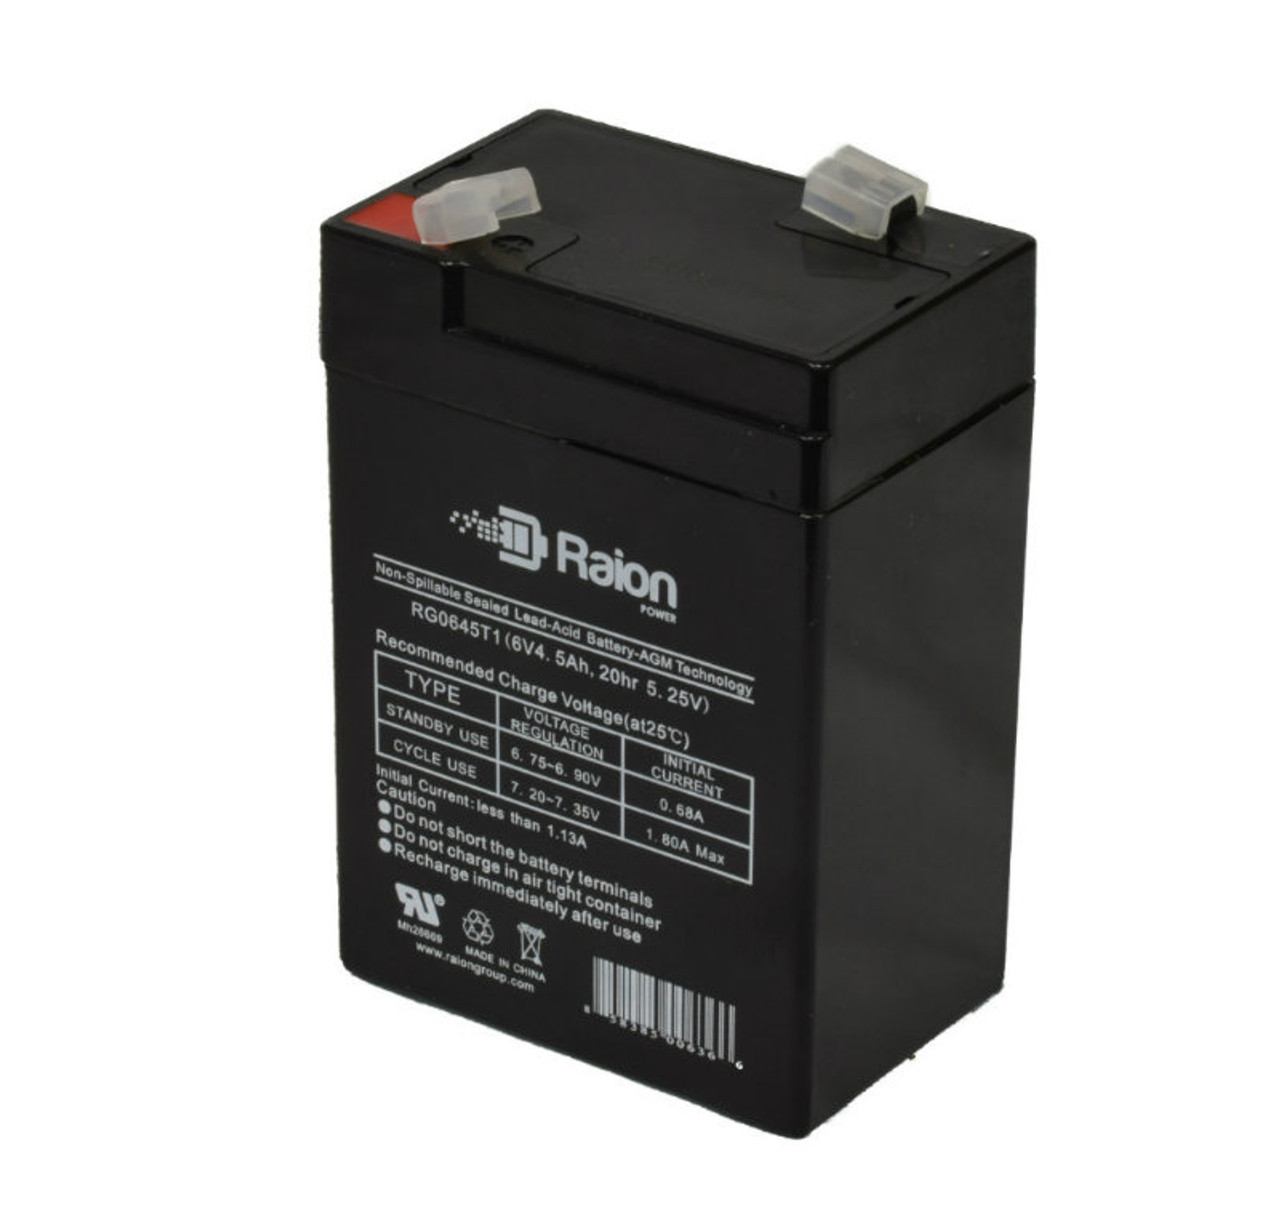 Raion Power RG0645T1 6V 4.5Ah Replacement Battery Cartridge for Yuasa NP4-6W